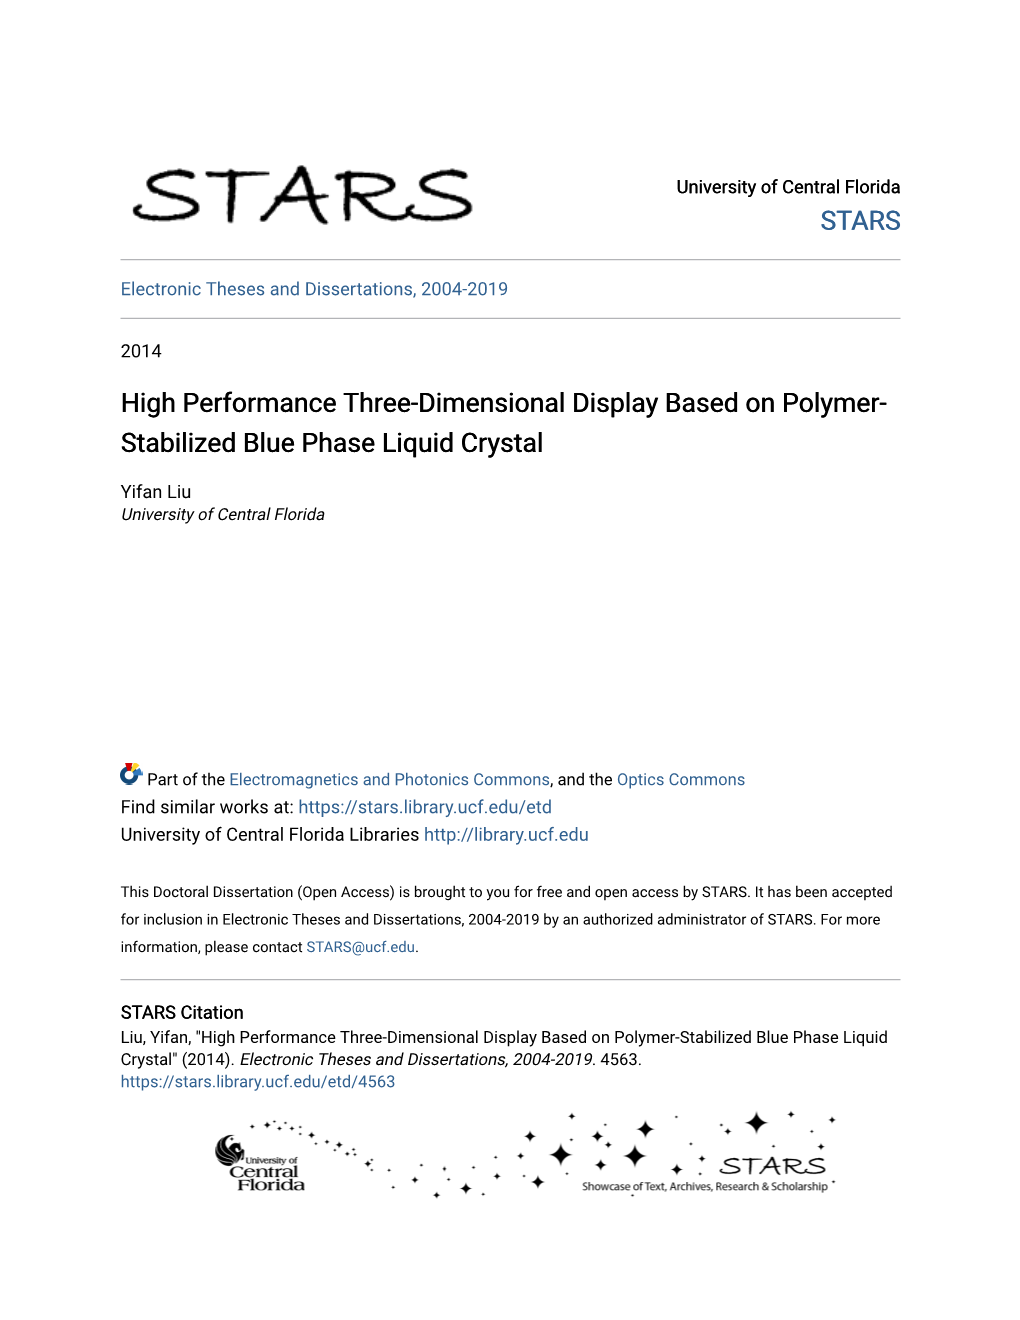 High Performance Three-Dimensional Display Based on Polymer- Stabilized Blue Phase Liquid Crystal